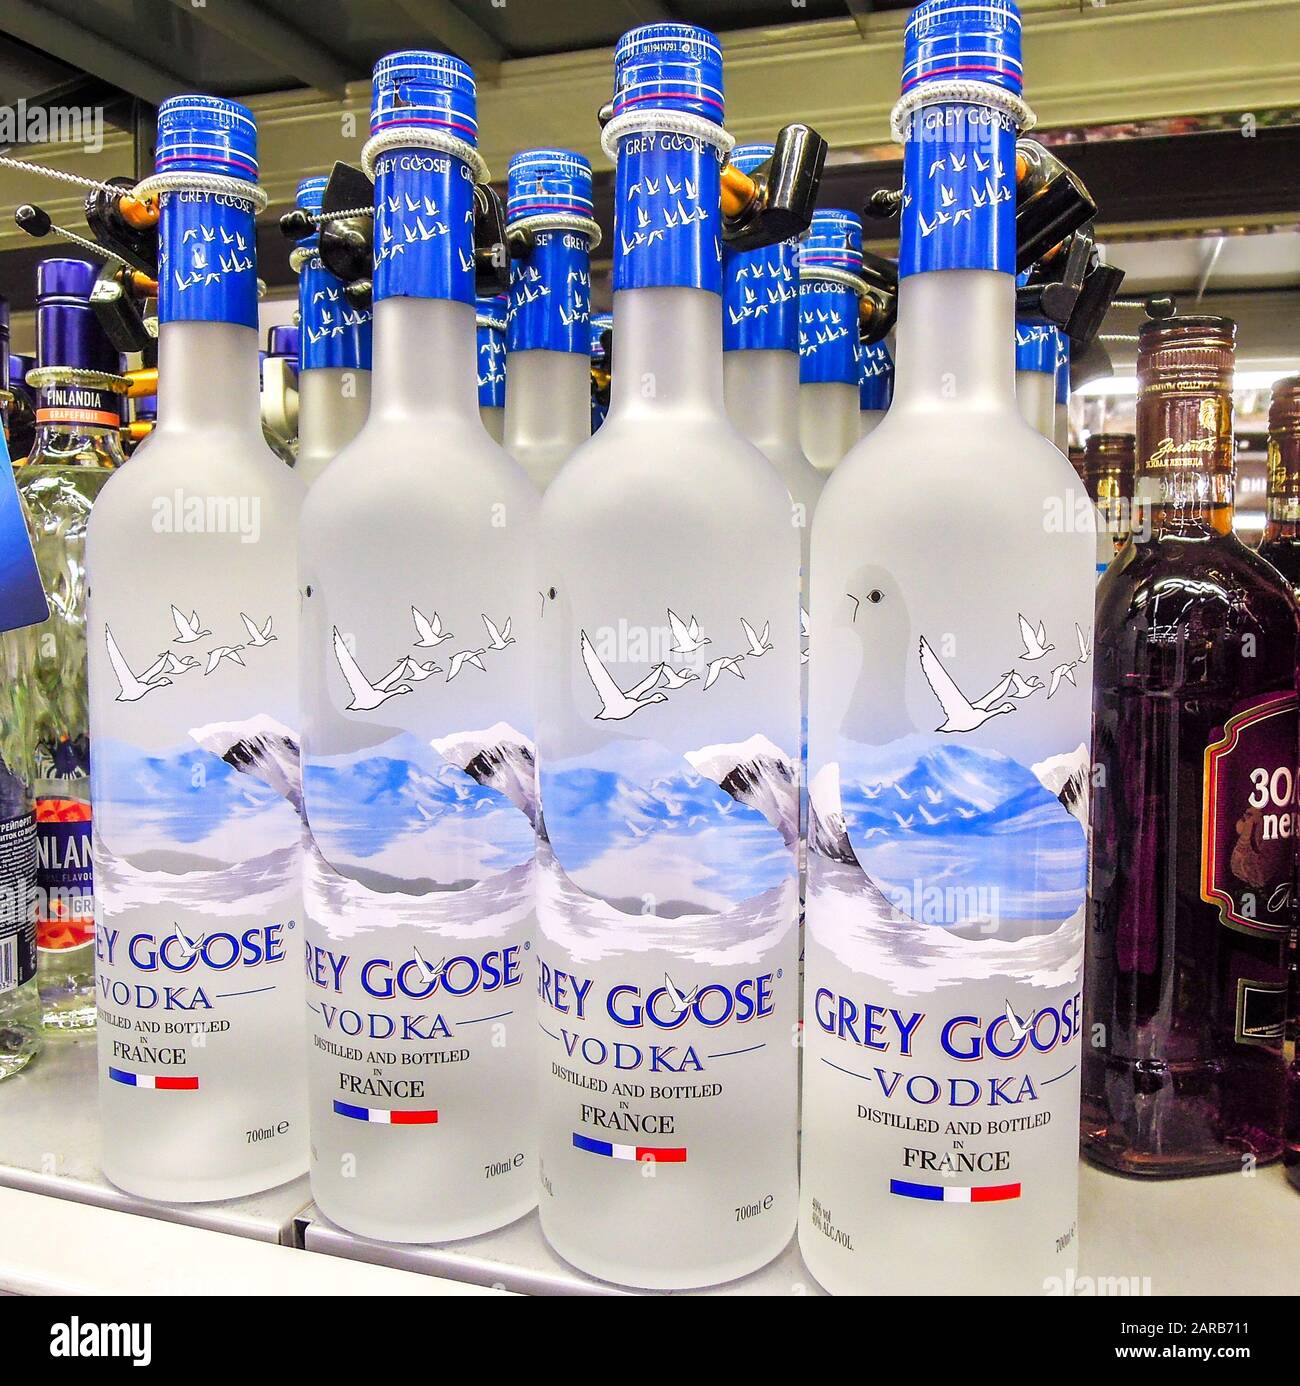 Vodka Grey Goose - 3L – Bottle of Italy